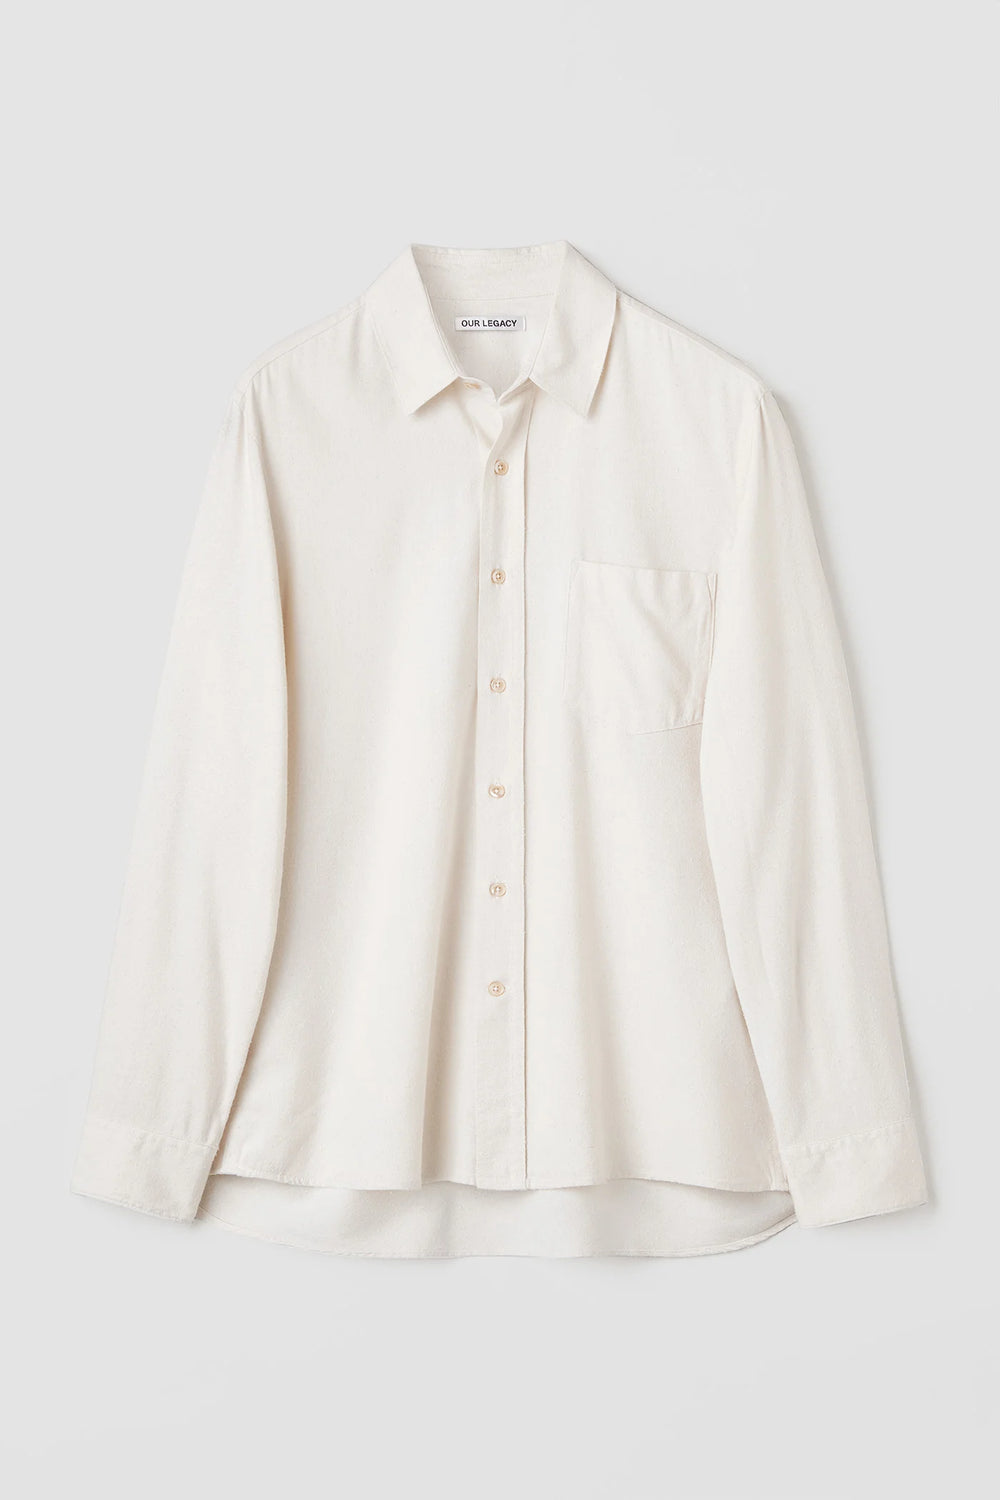 OUR LEGACY Classic Shirt White Silk